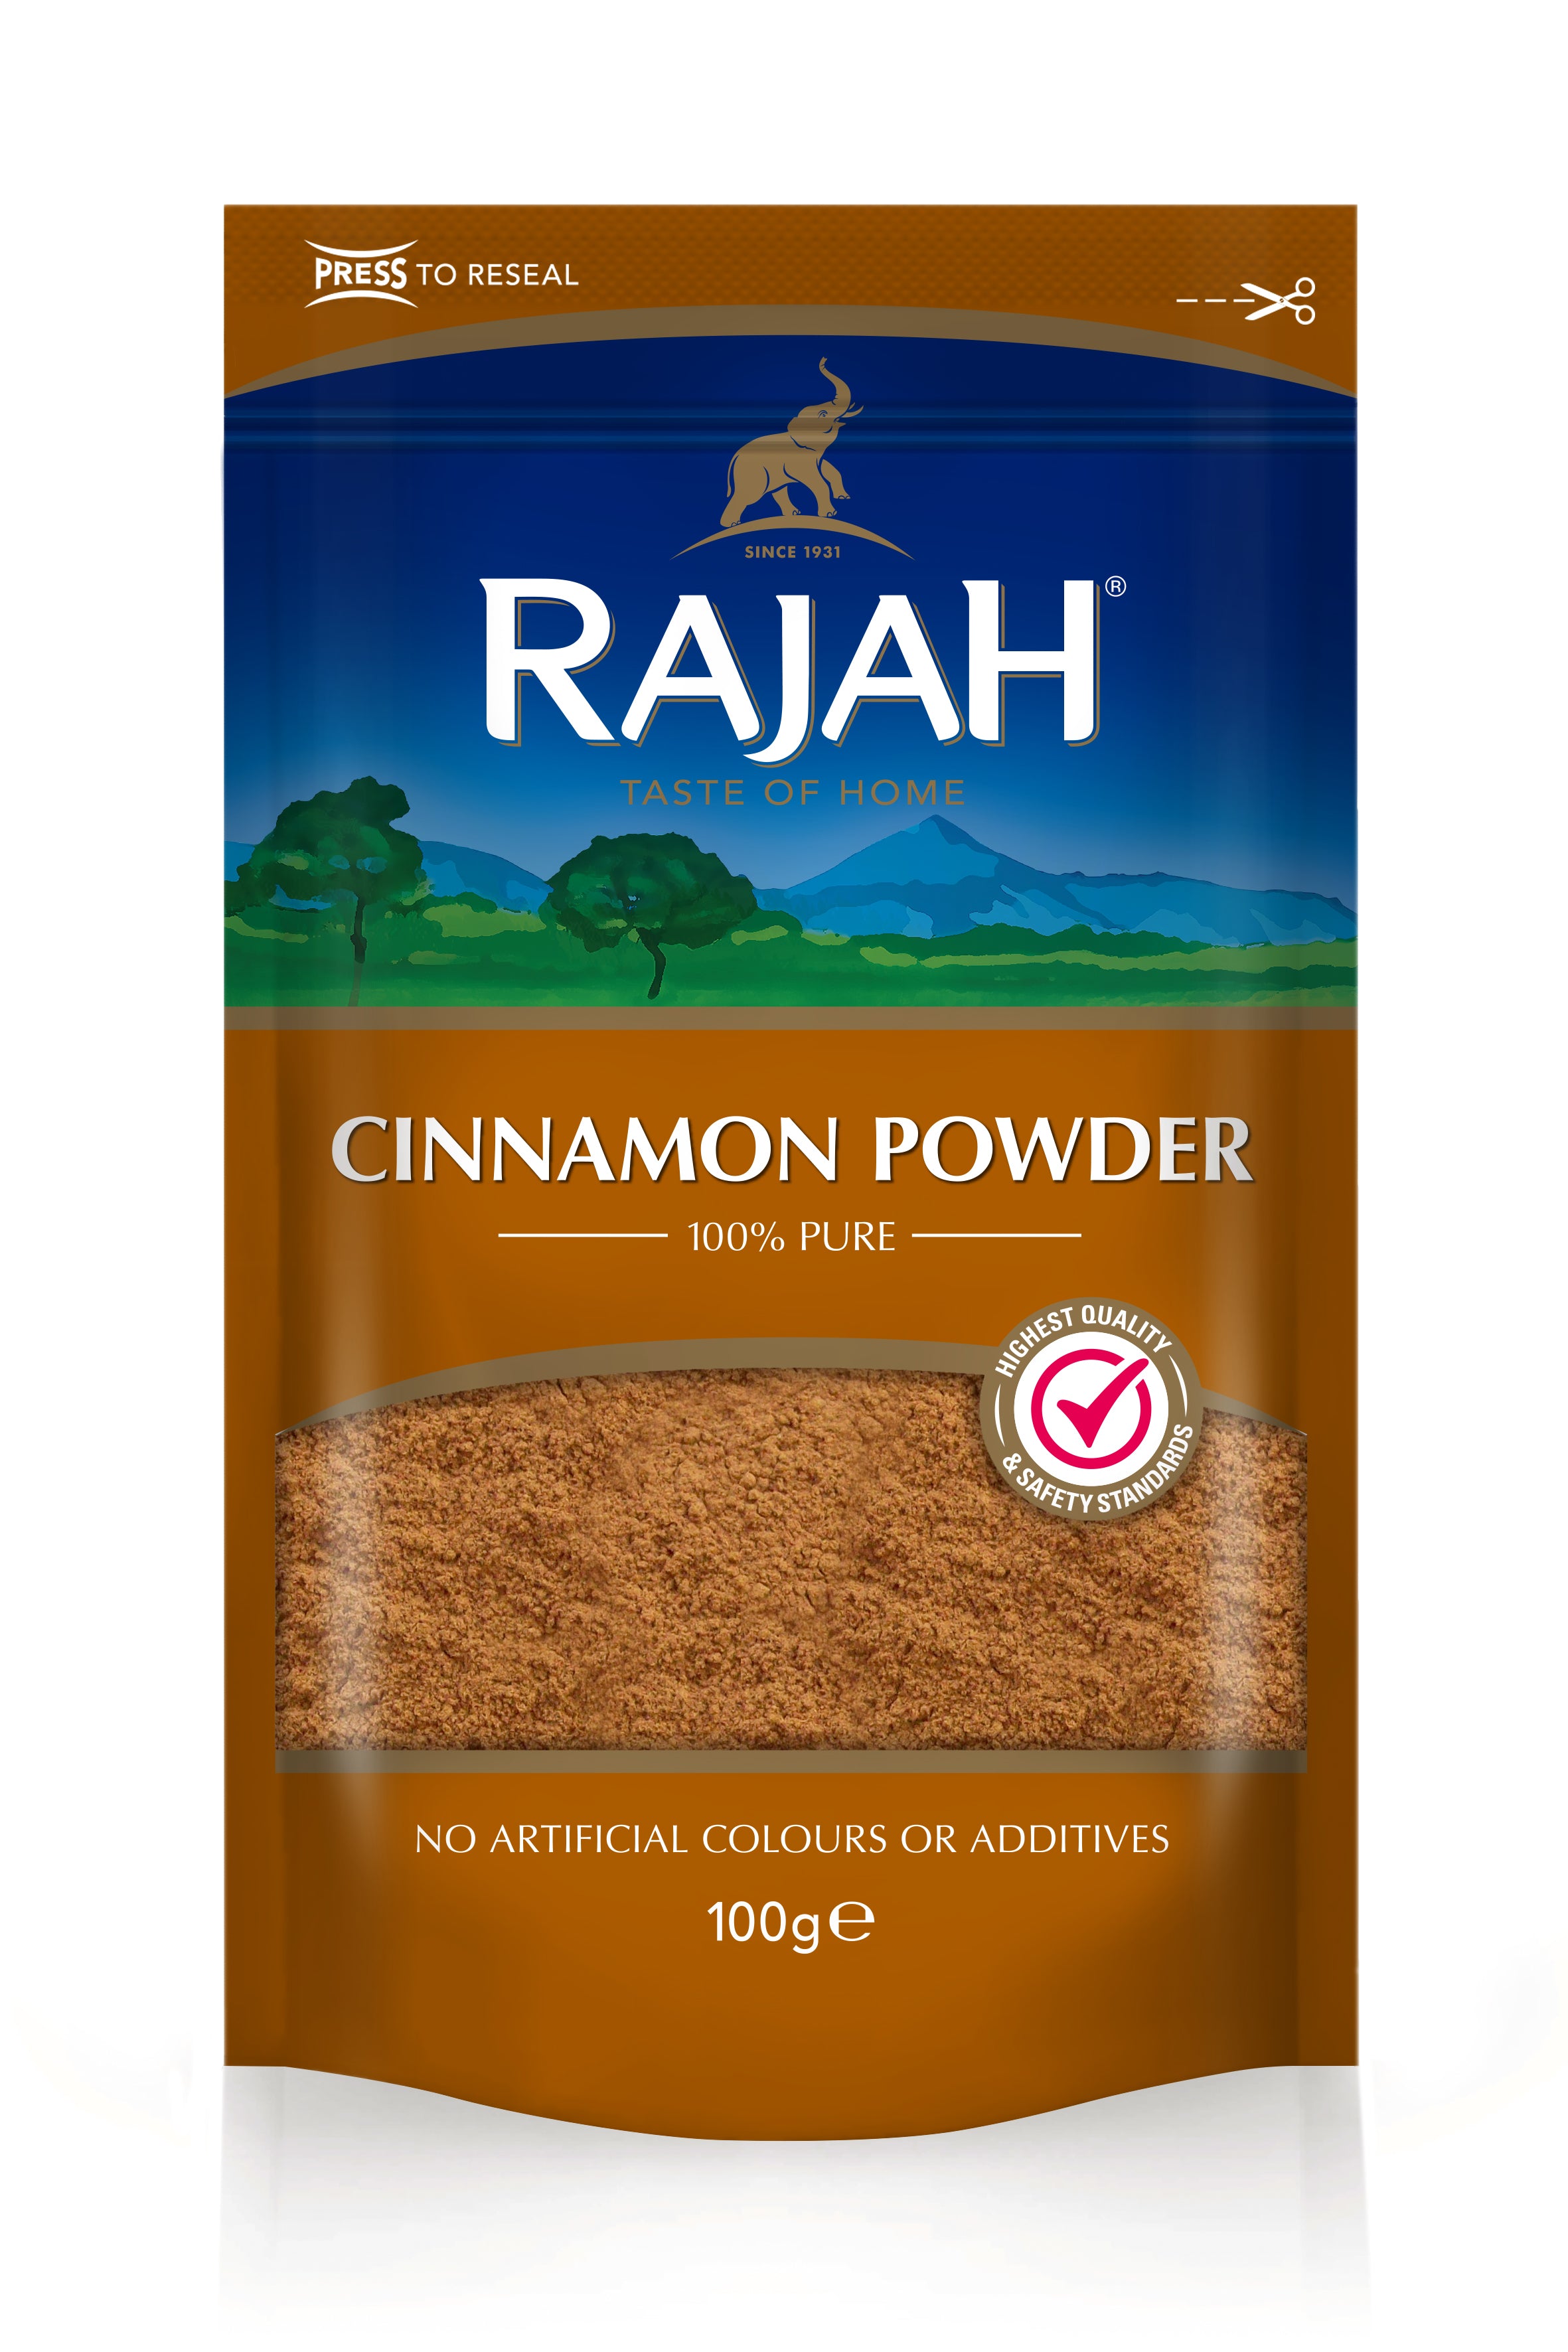 Rajah Cinnamon Powder - SaveCo Cash & Carry